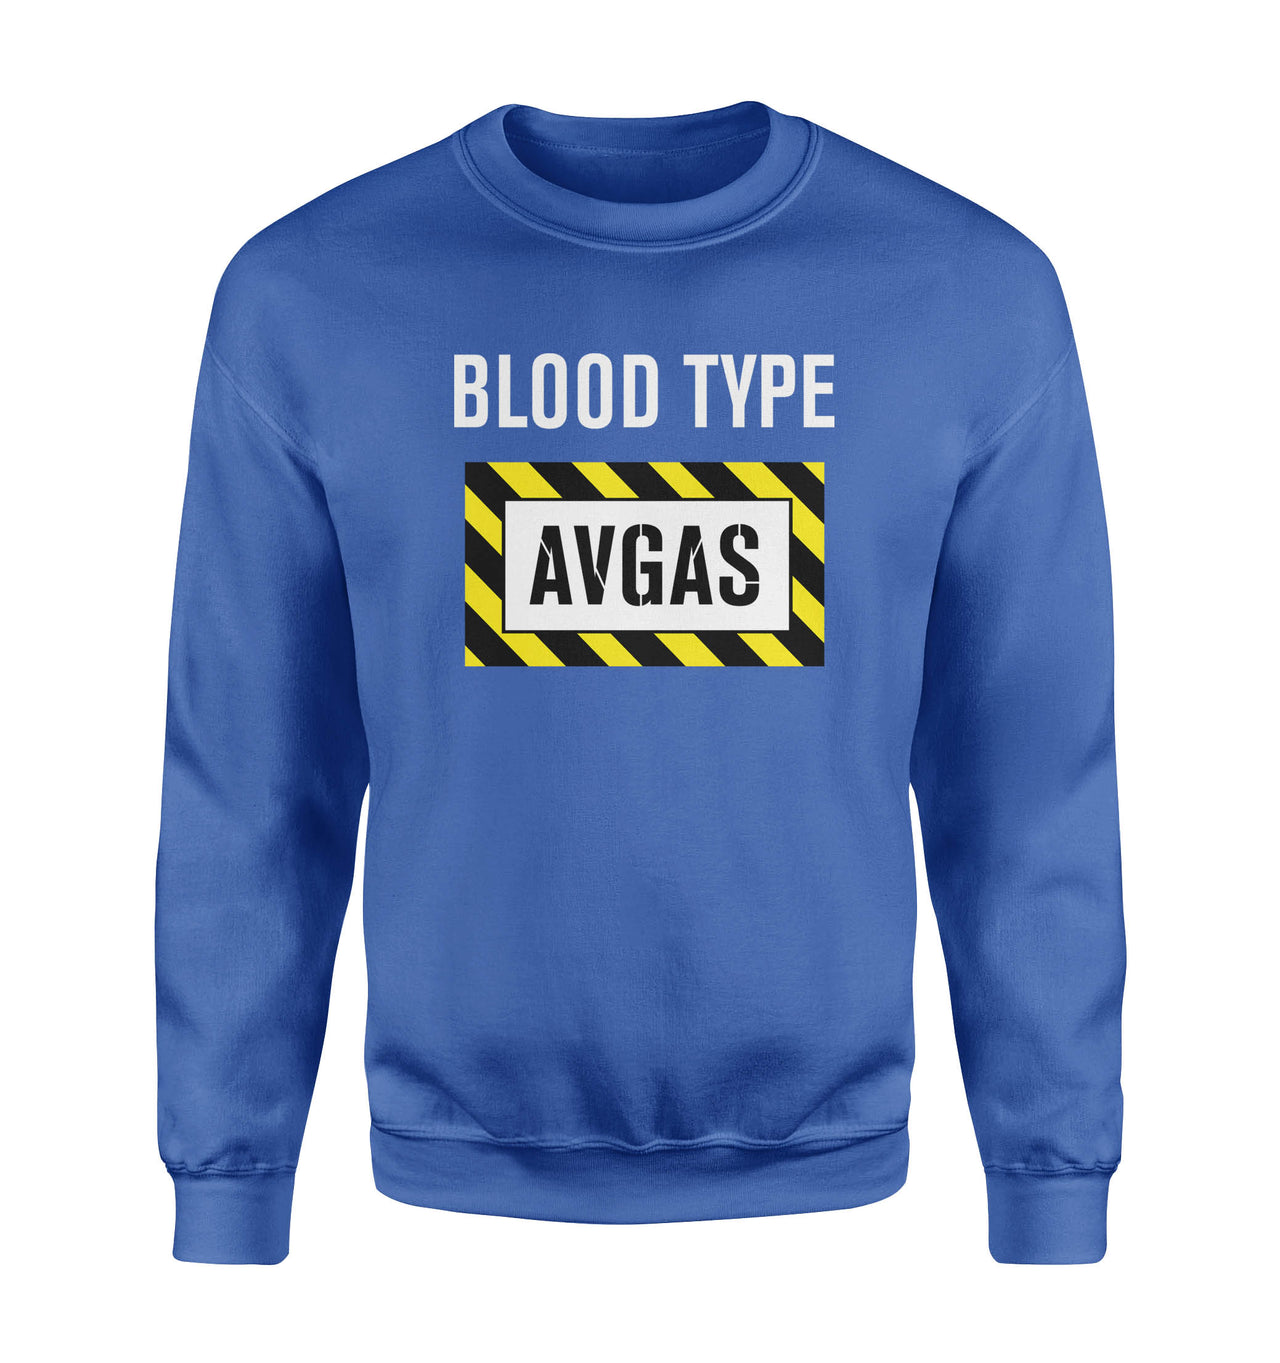 Blood Type AVGAS Designed Sweatshirts